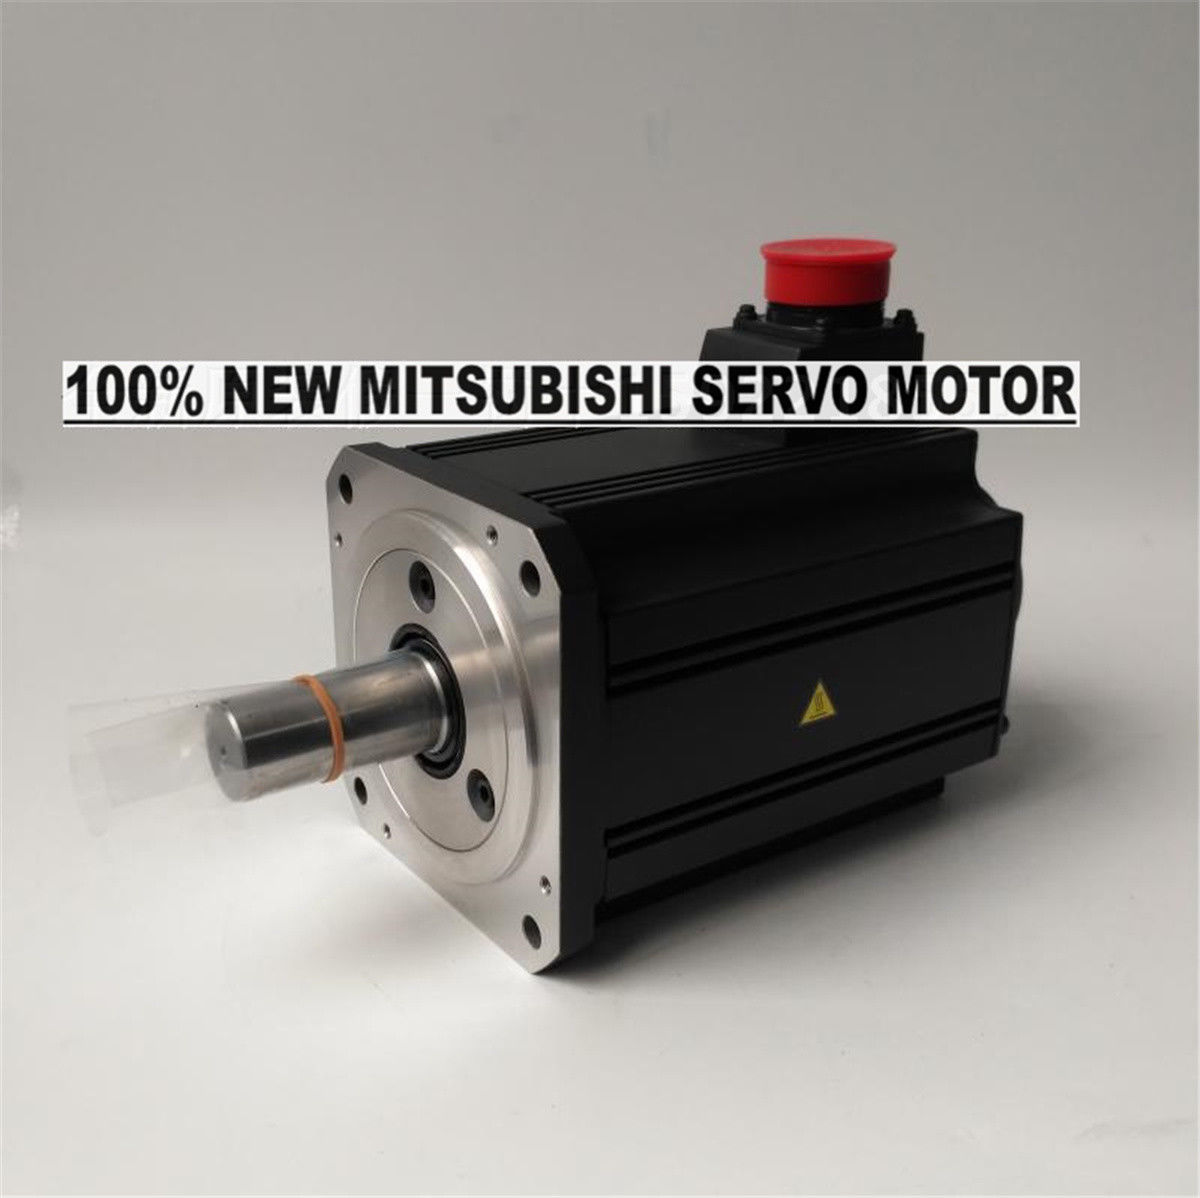 Brand NEW Mitsubishi Servo Motor HG-RR353 in box HGRR353 - Click Image to Close